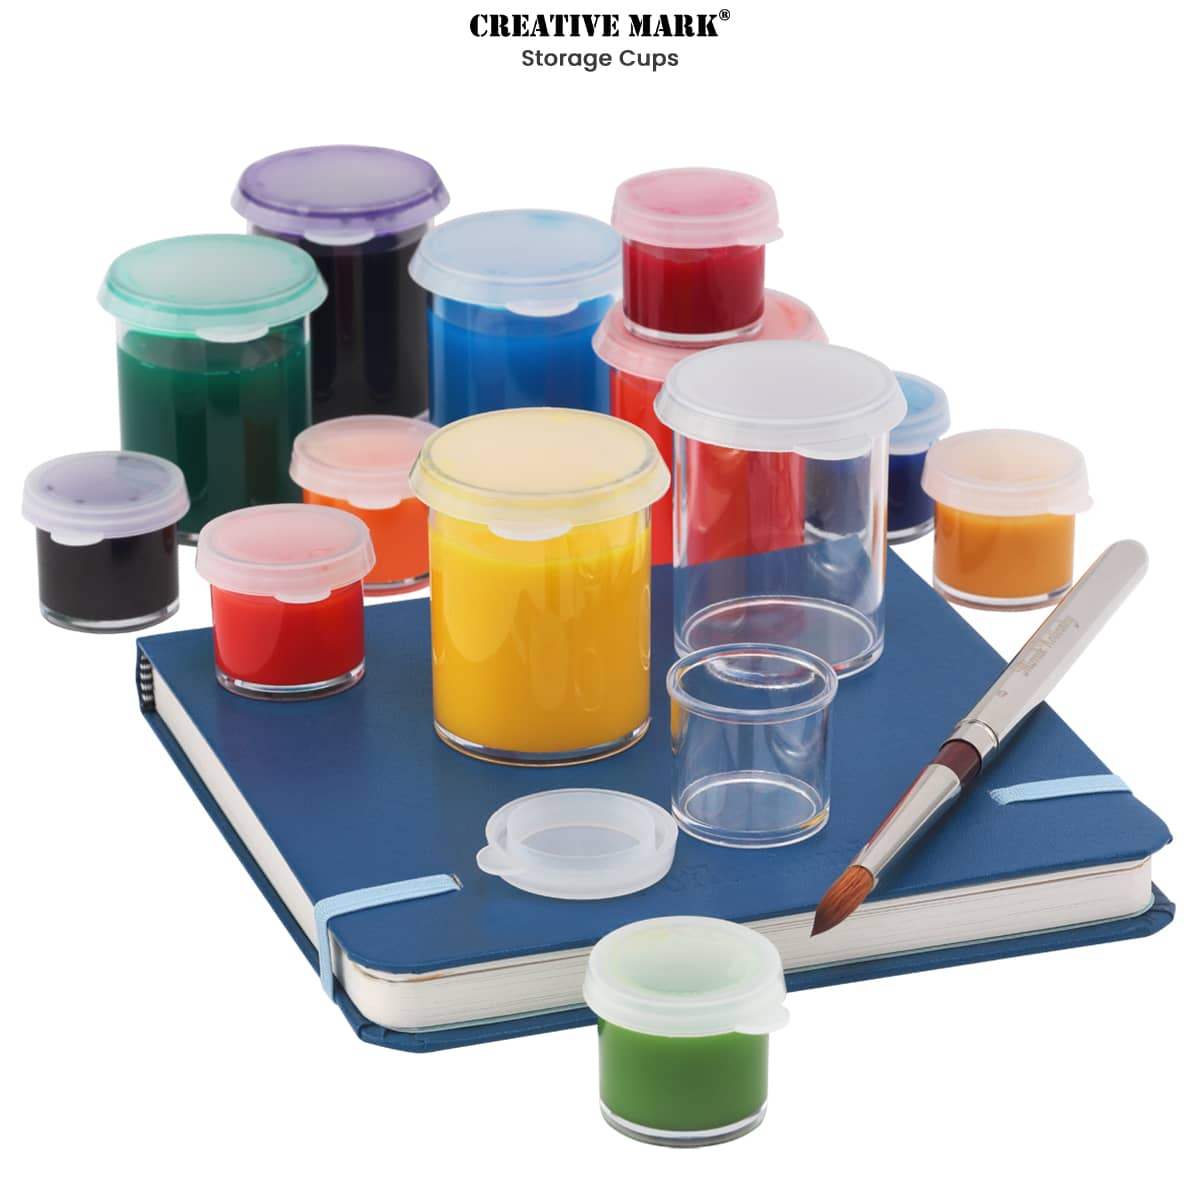 Creative Mark Storage Cups